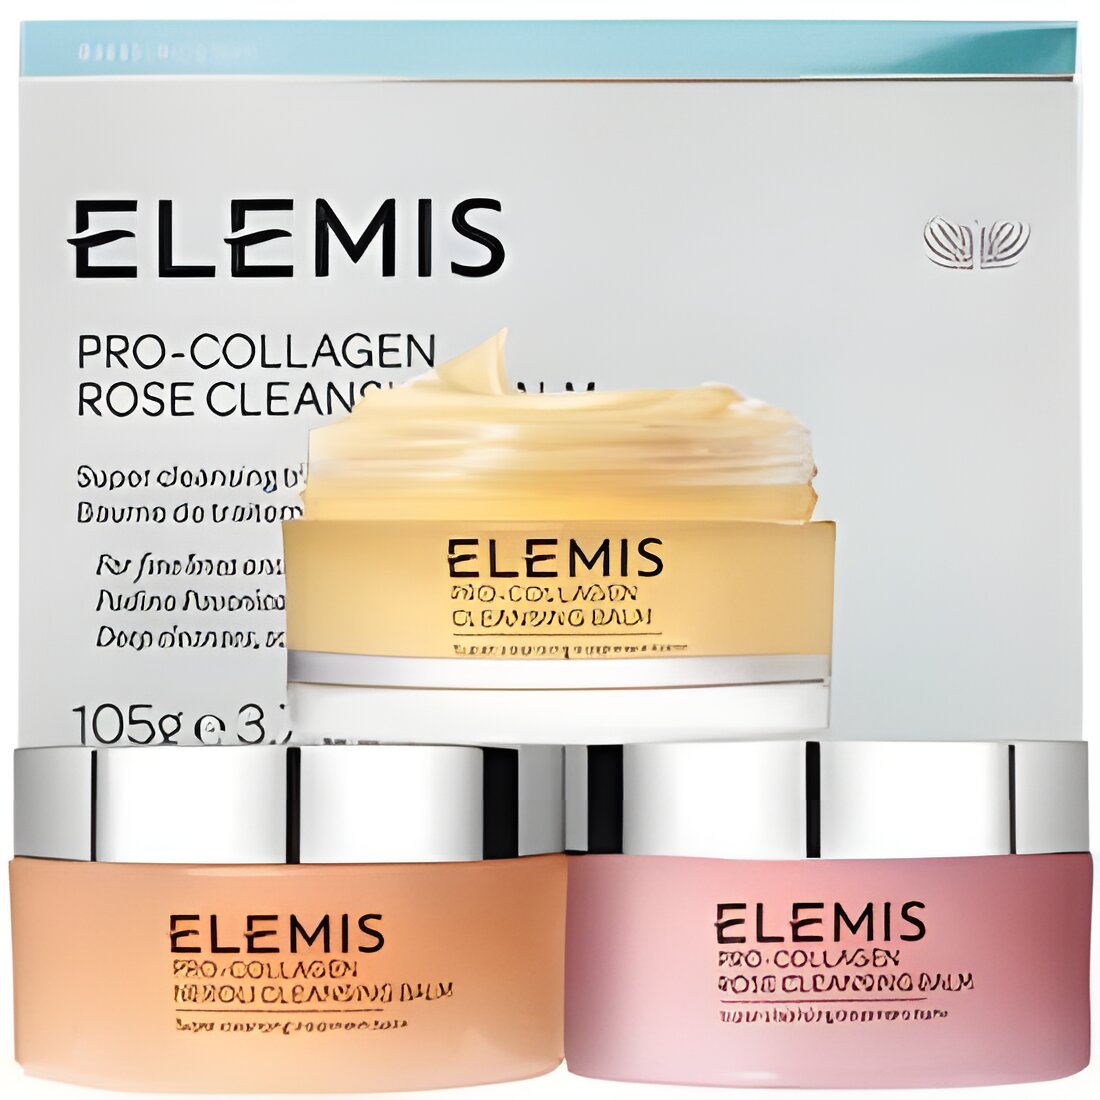 Free Elemis Pro-Collagen Cleansing Balms